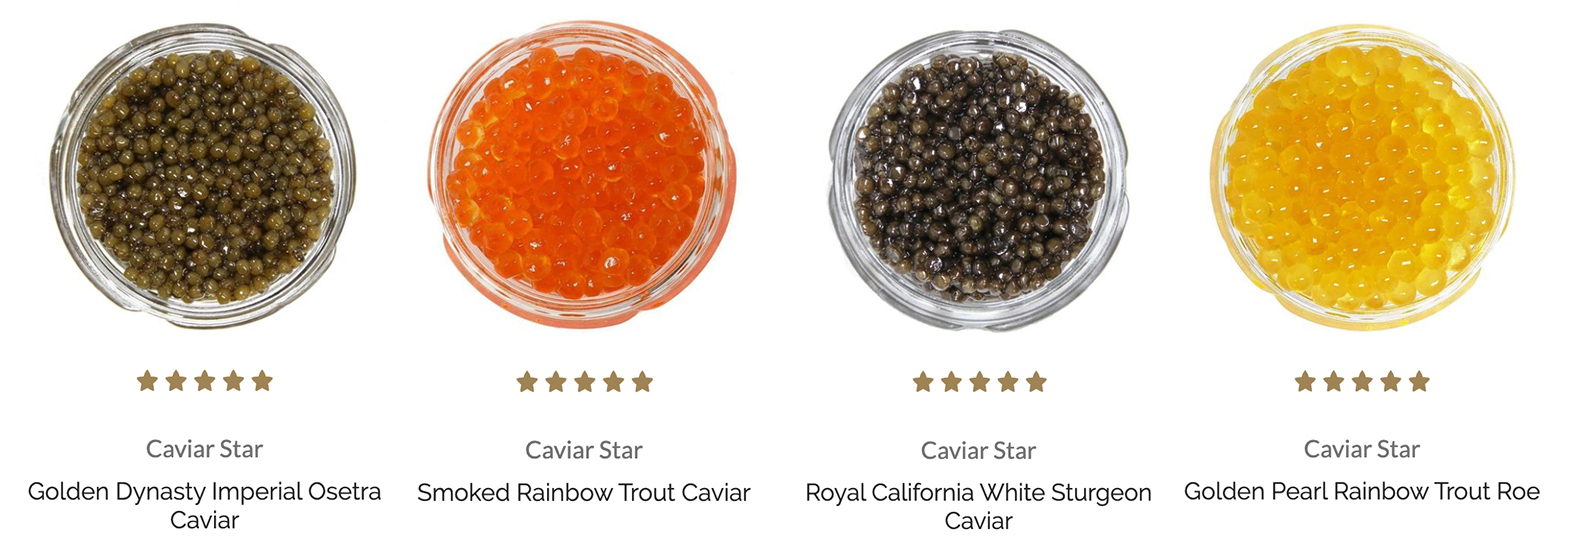 All Black Caviar and Red Caviar in stock